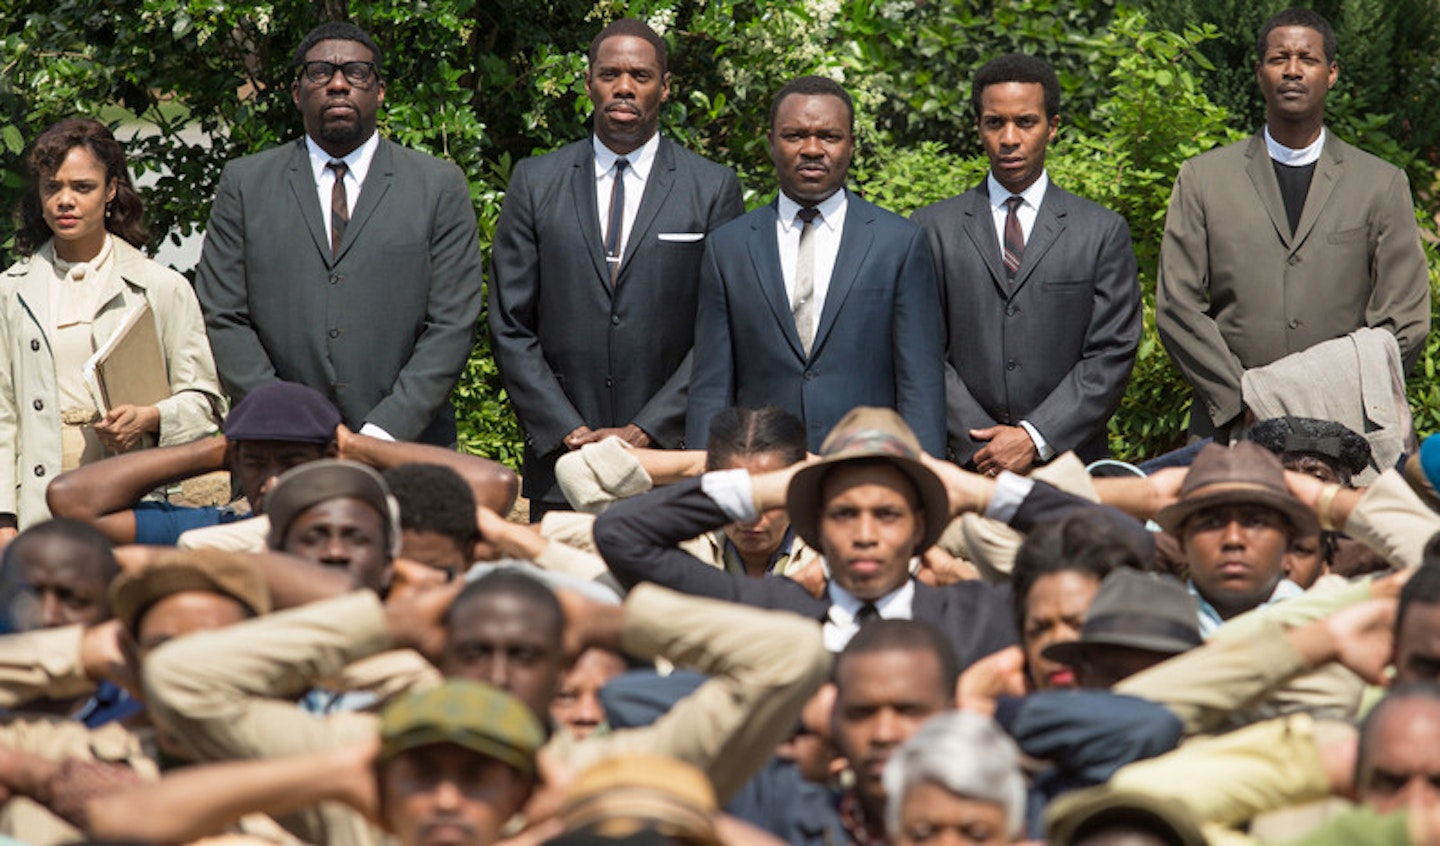 A scene from Selma (2015)